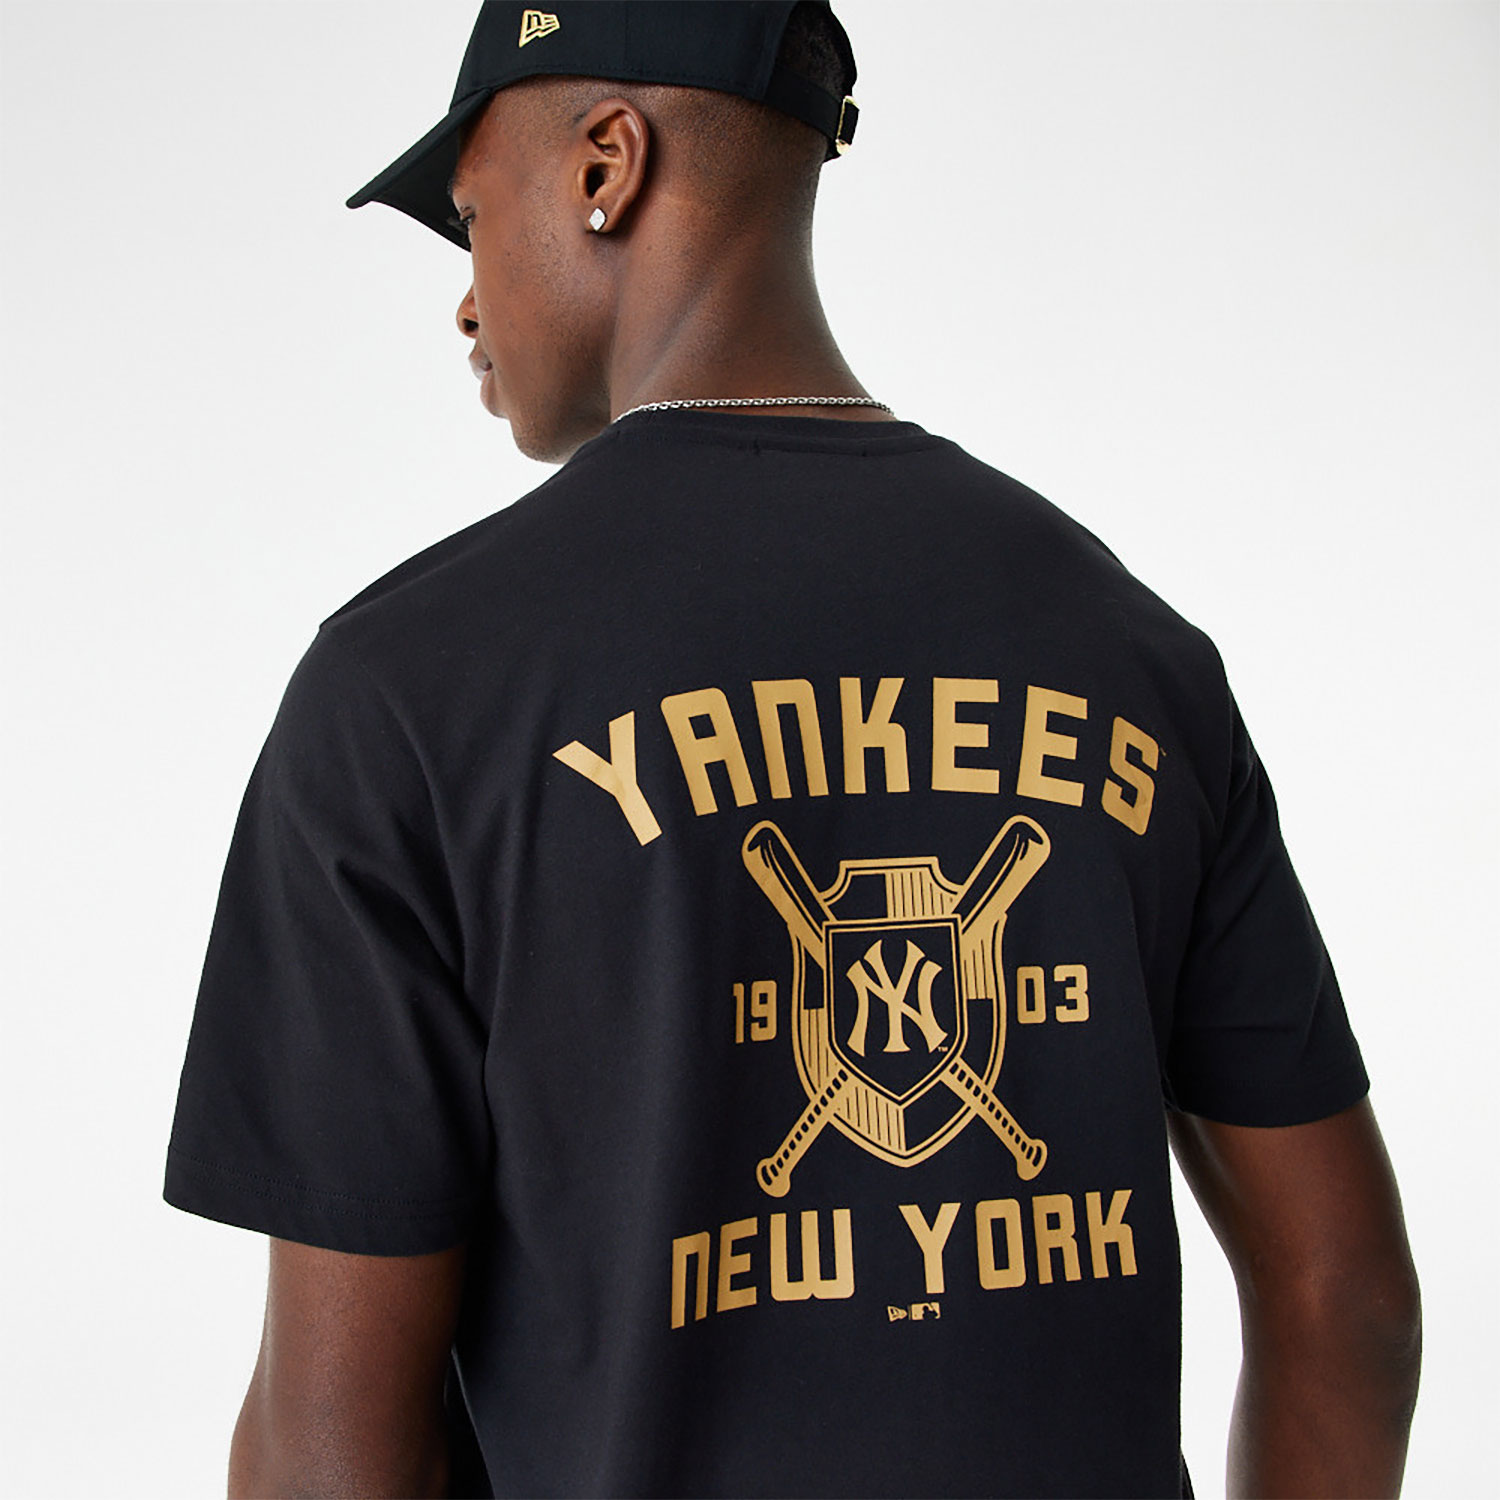 New York Yankees MLB Team Graphic Black T-Shirt